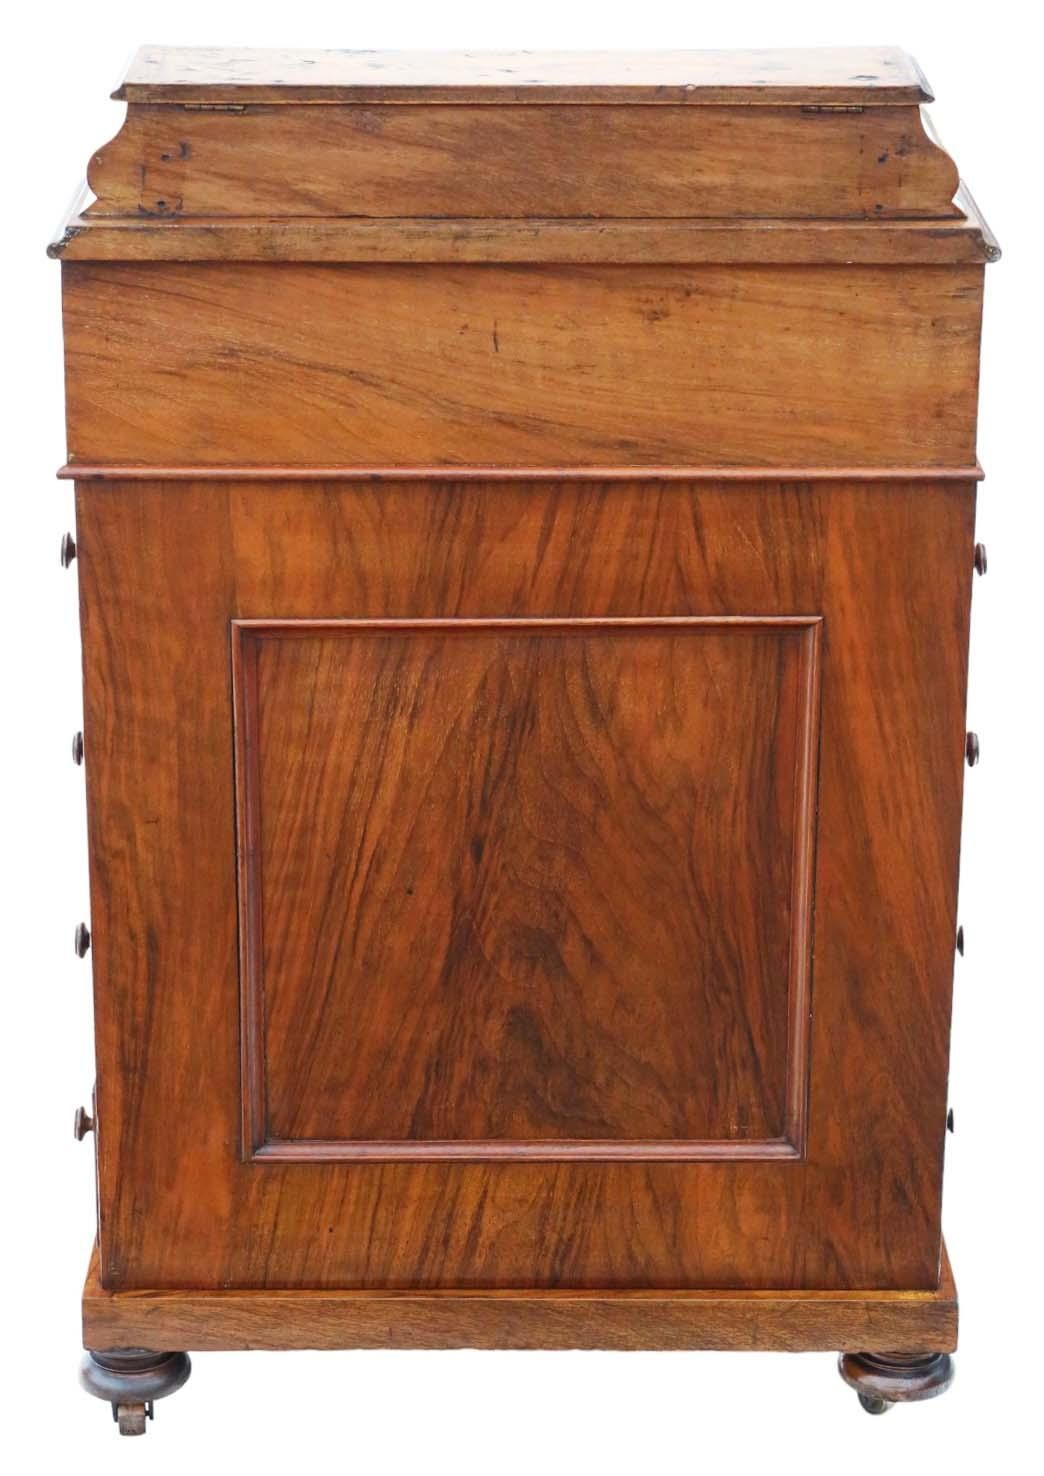 Victorian Burr Walnut Davenport Writing Table Desk - C. 1870 For Sale 4